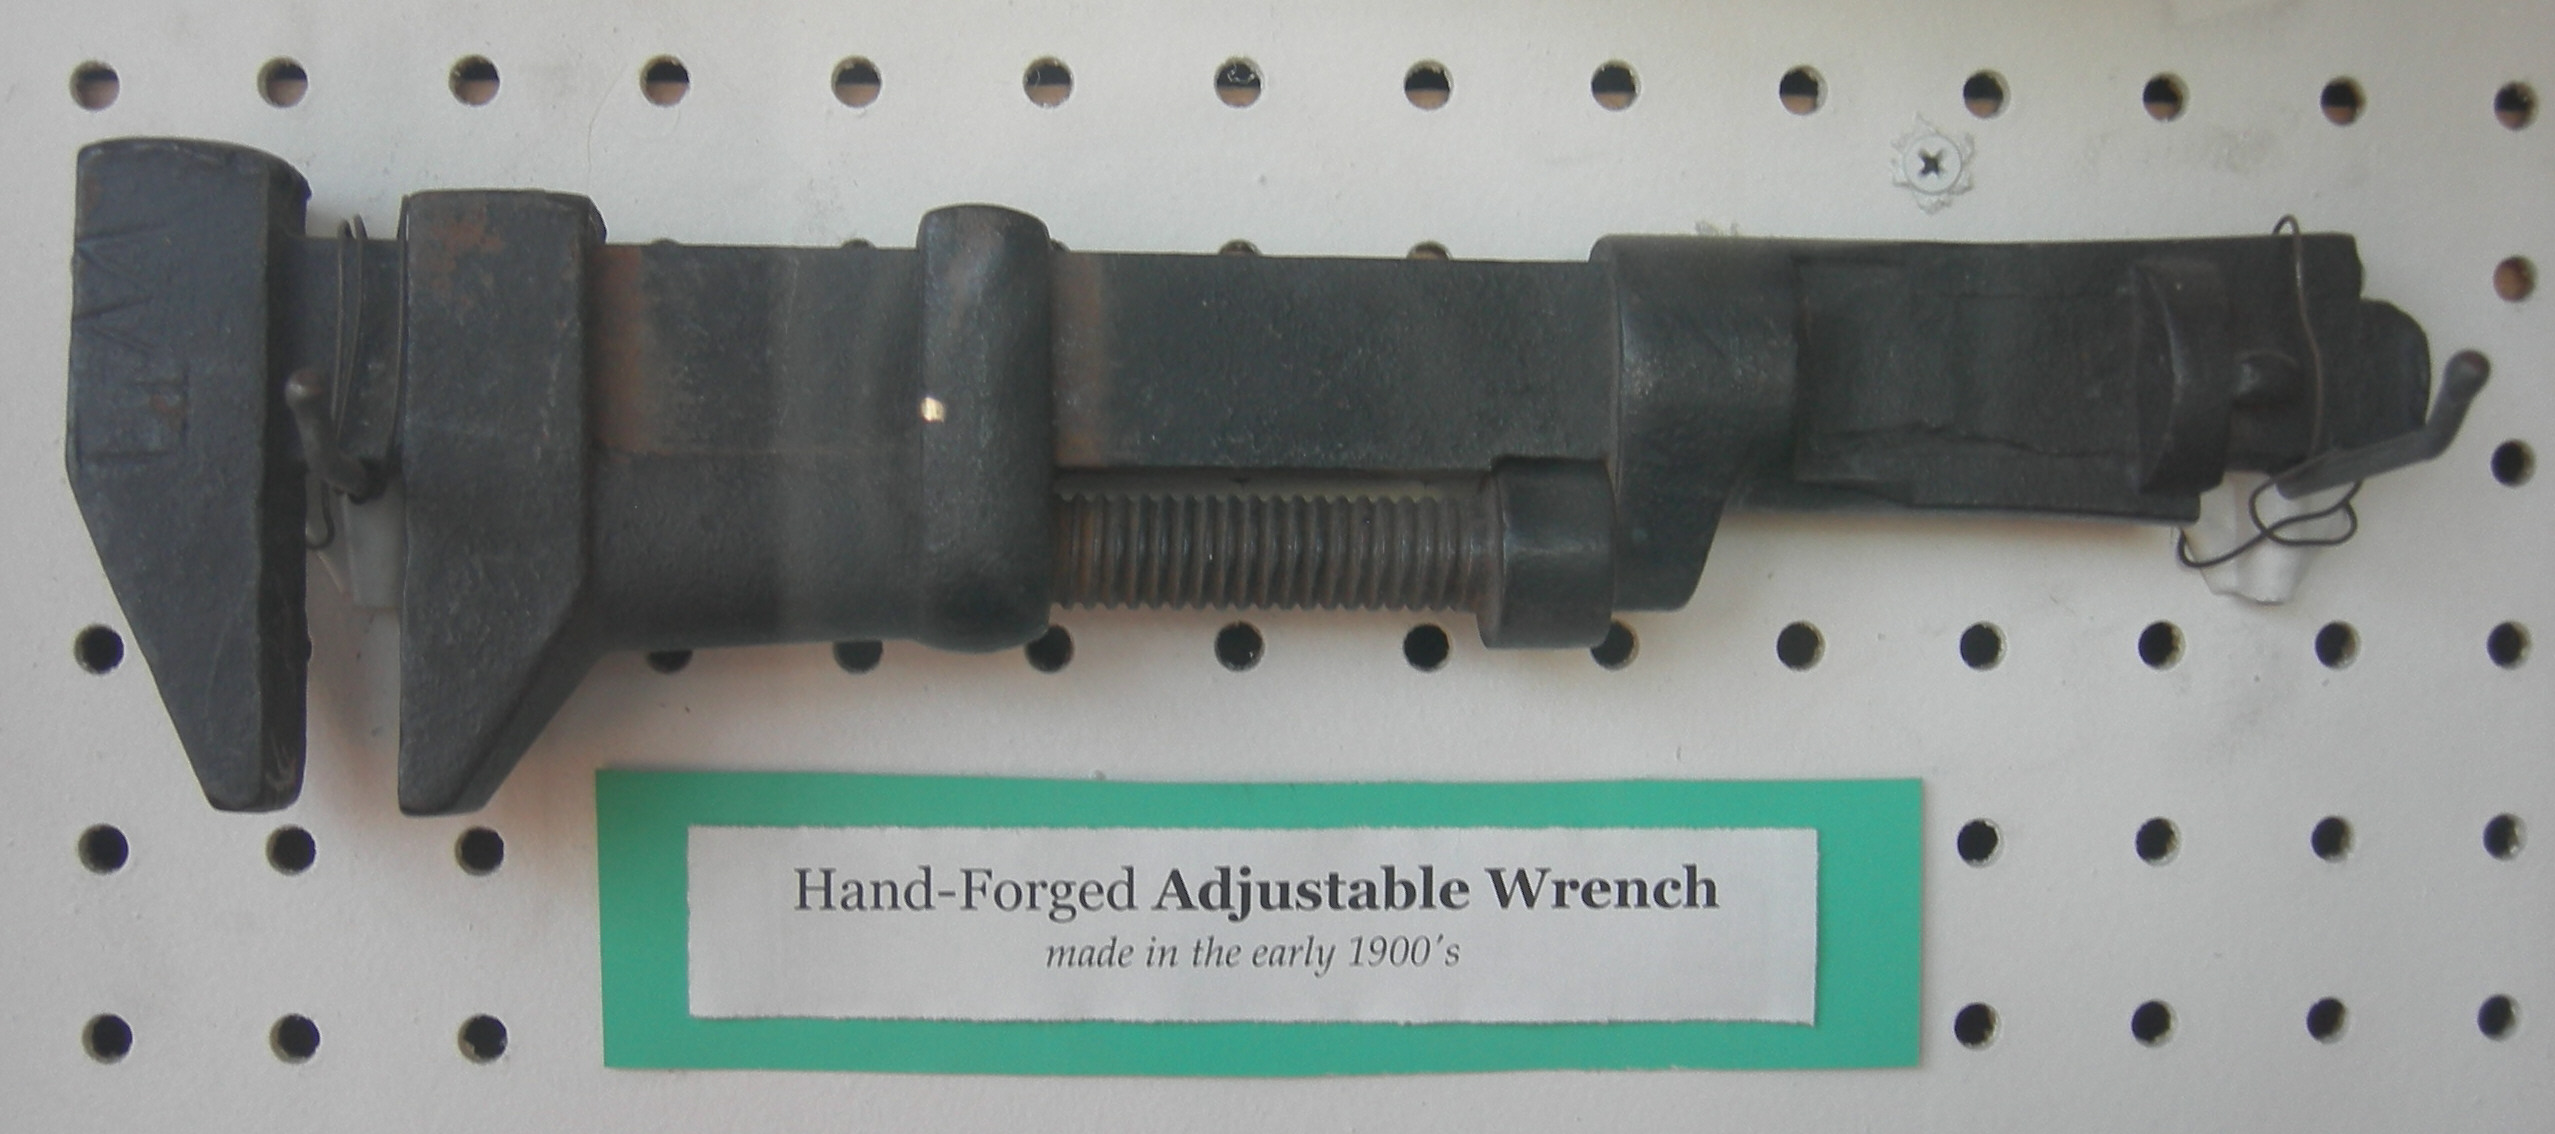 Tweedy_and_Popp_-_hand-forged_adjustable